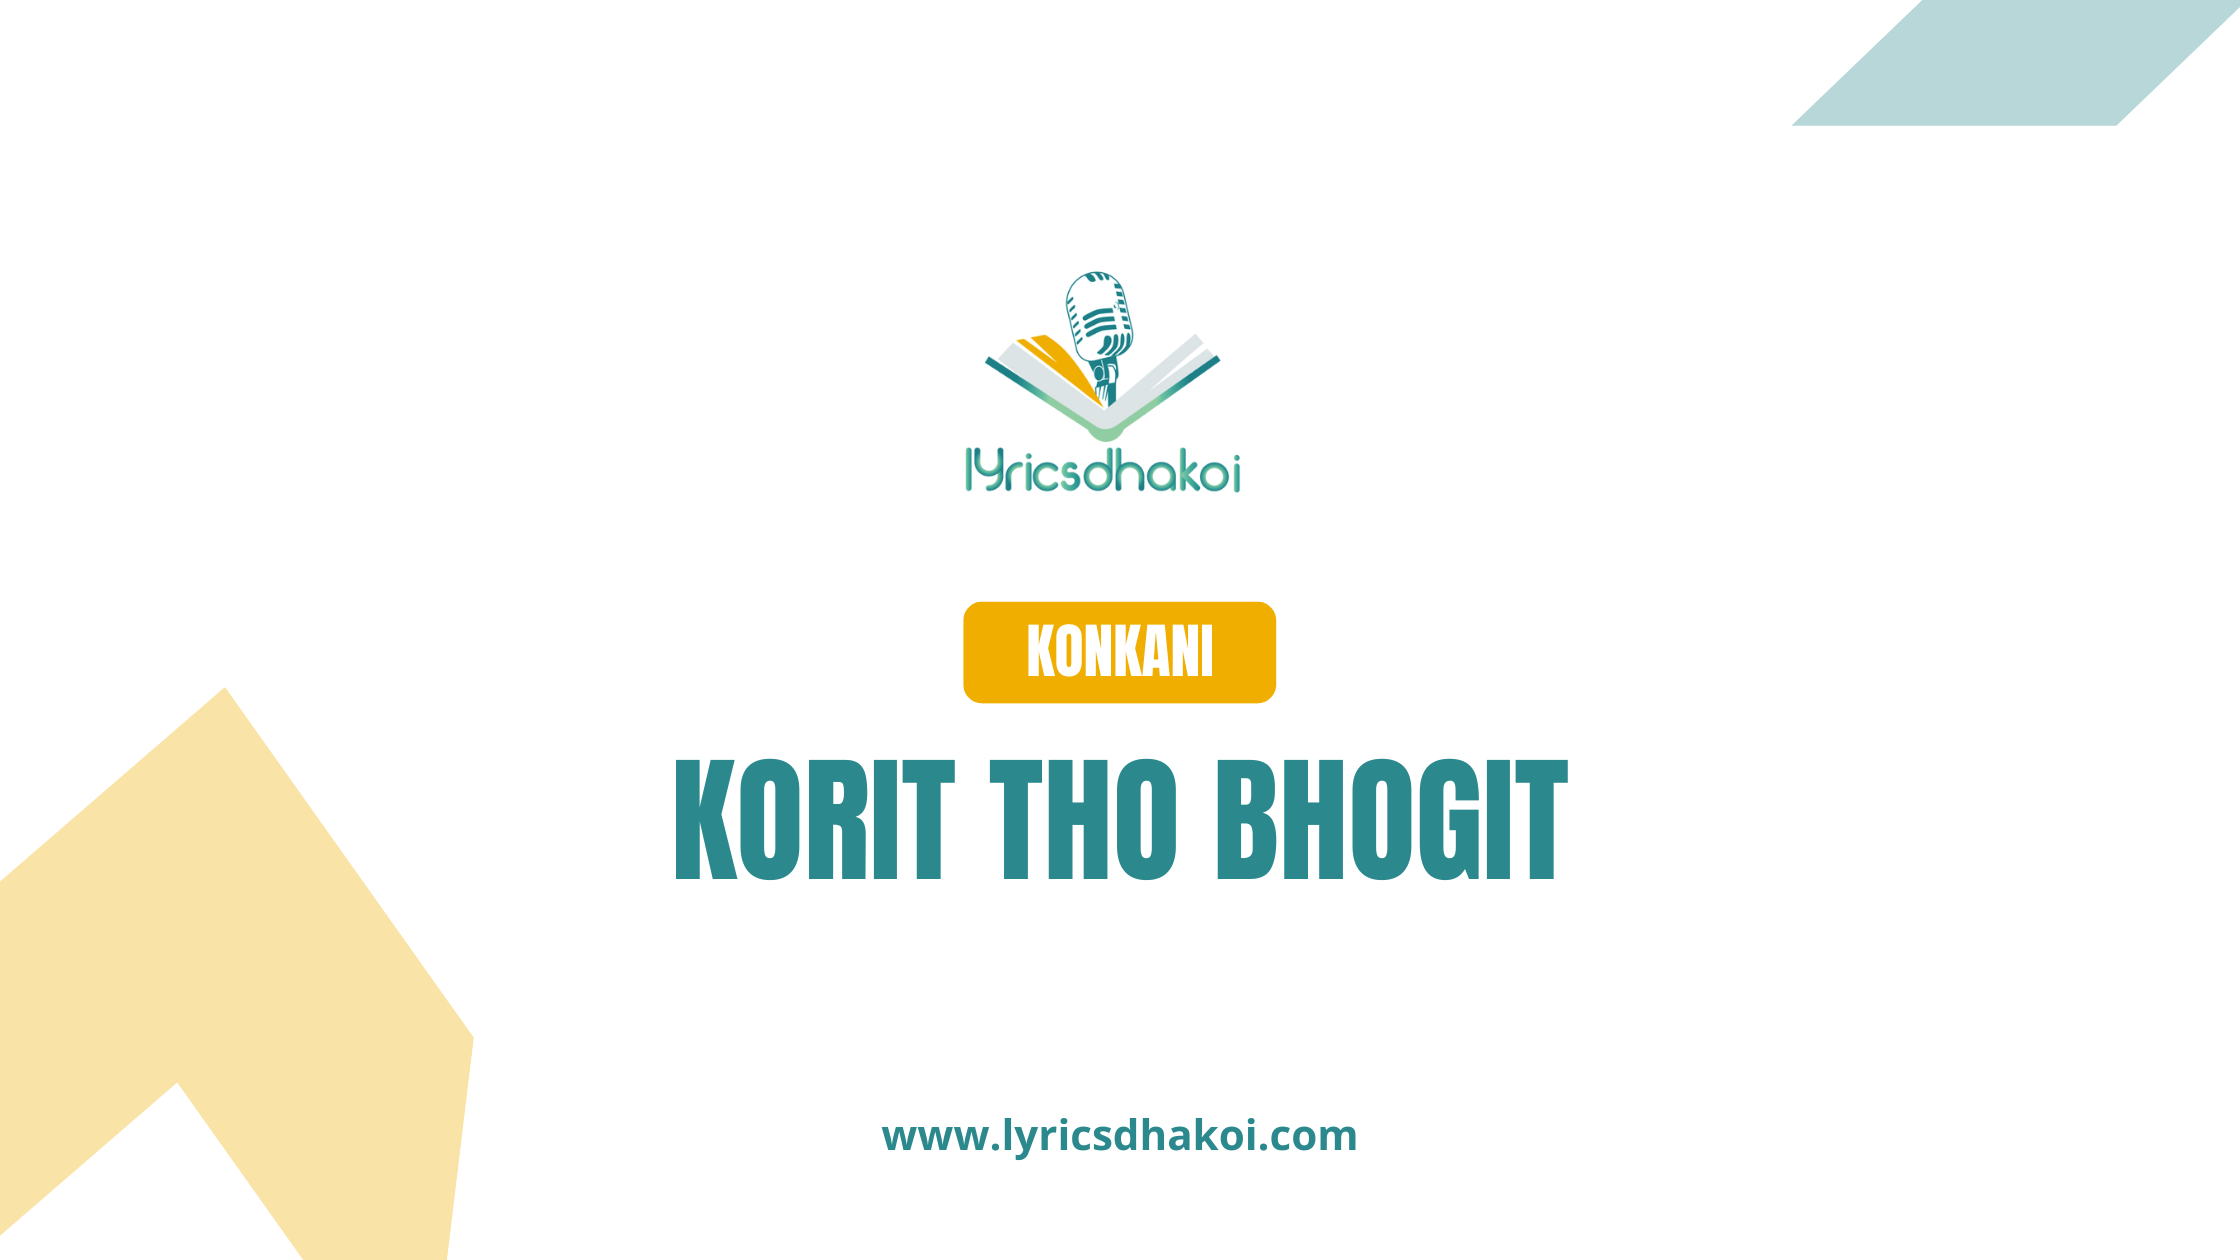 Korit Tho Bhogit Konkani Lyrics for Karaoke Online - LyricsDhakoi.com